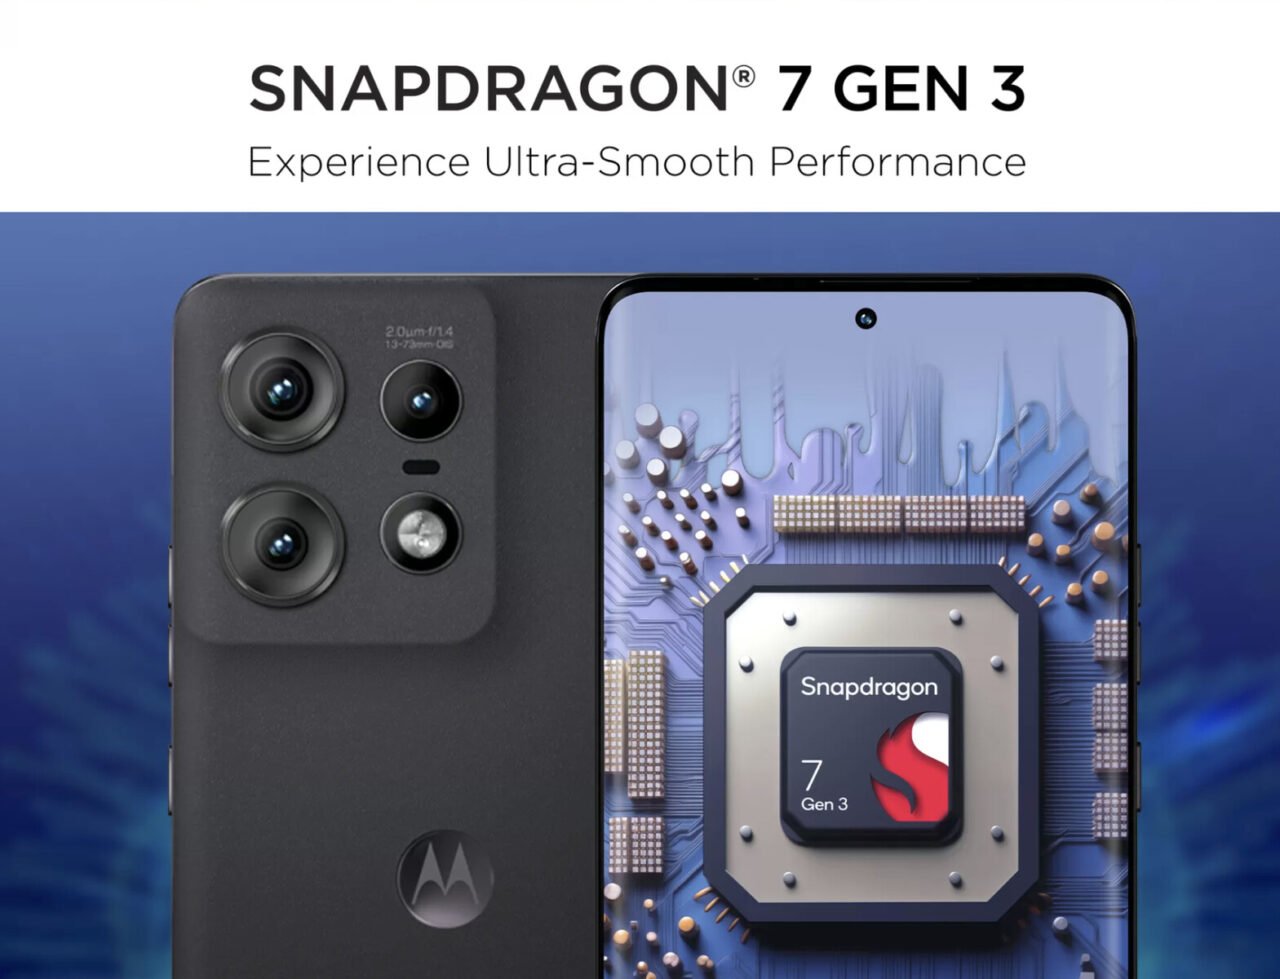 Reklama chipu Snapdragon 7 Gen 3 z telefonem Motorola, grafika półprzewodnika i napisem "Experience Ultra-Smooth Performance".